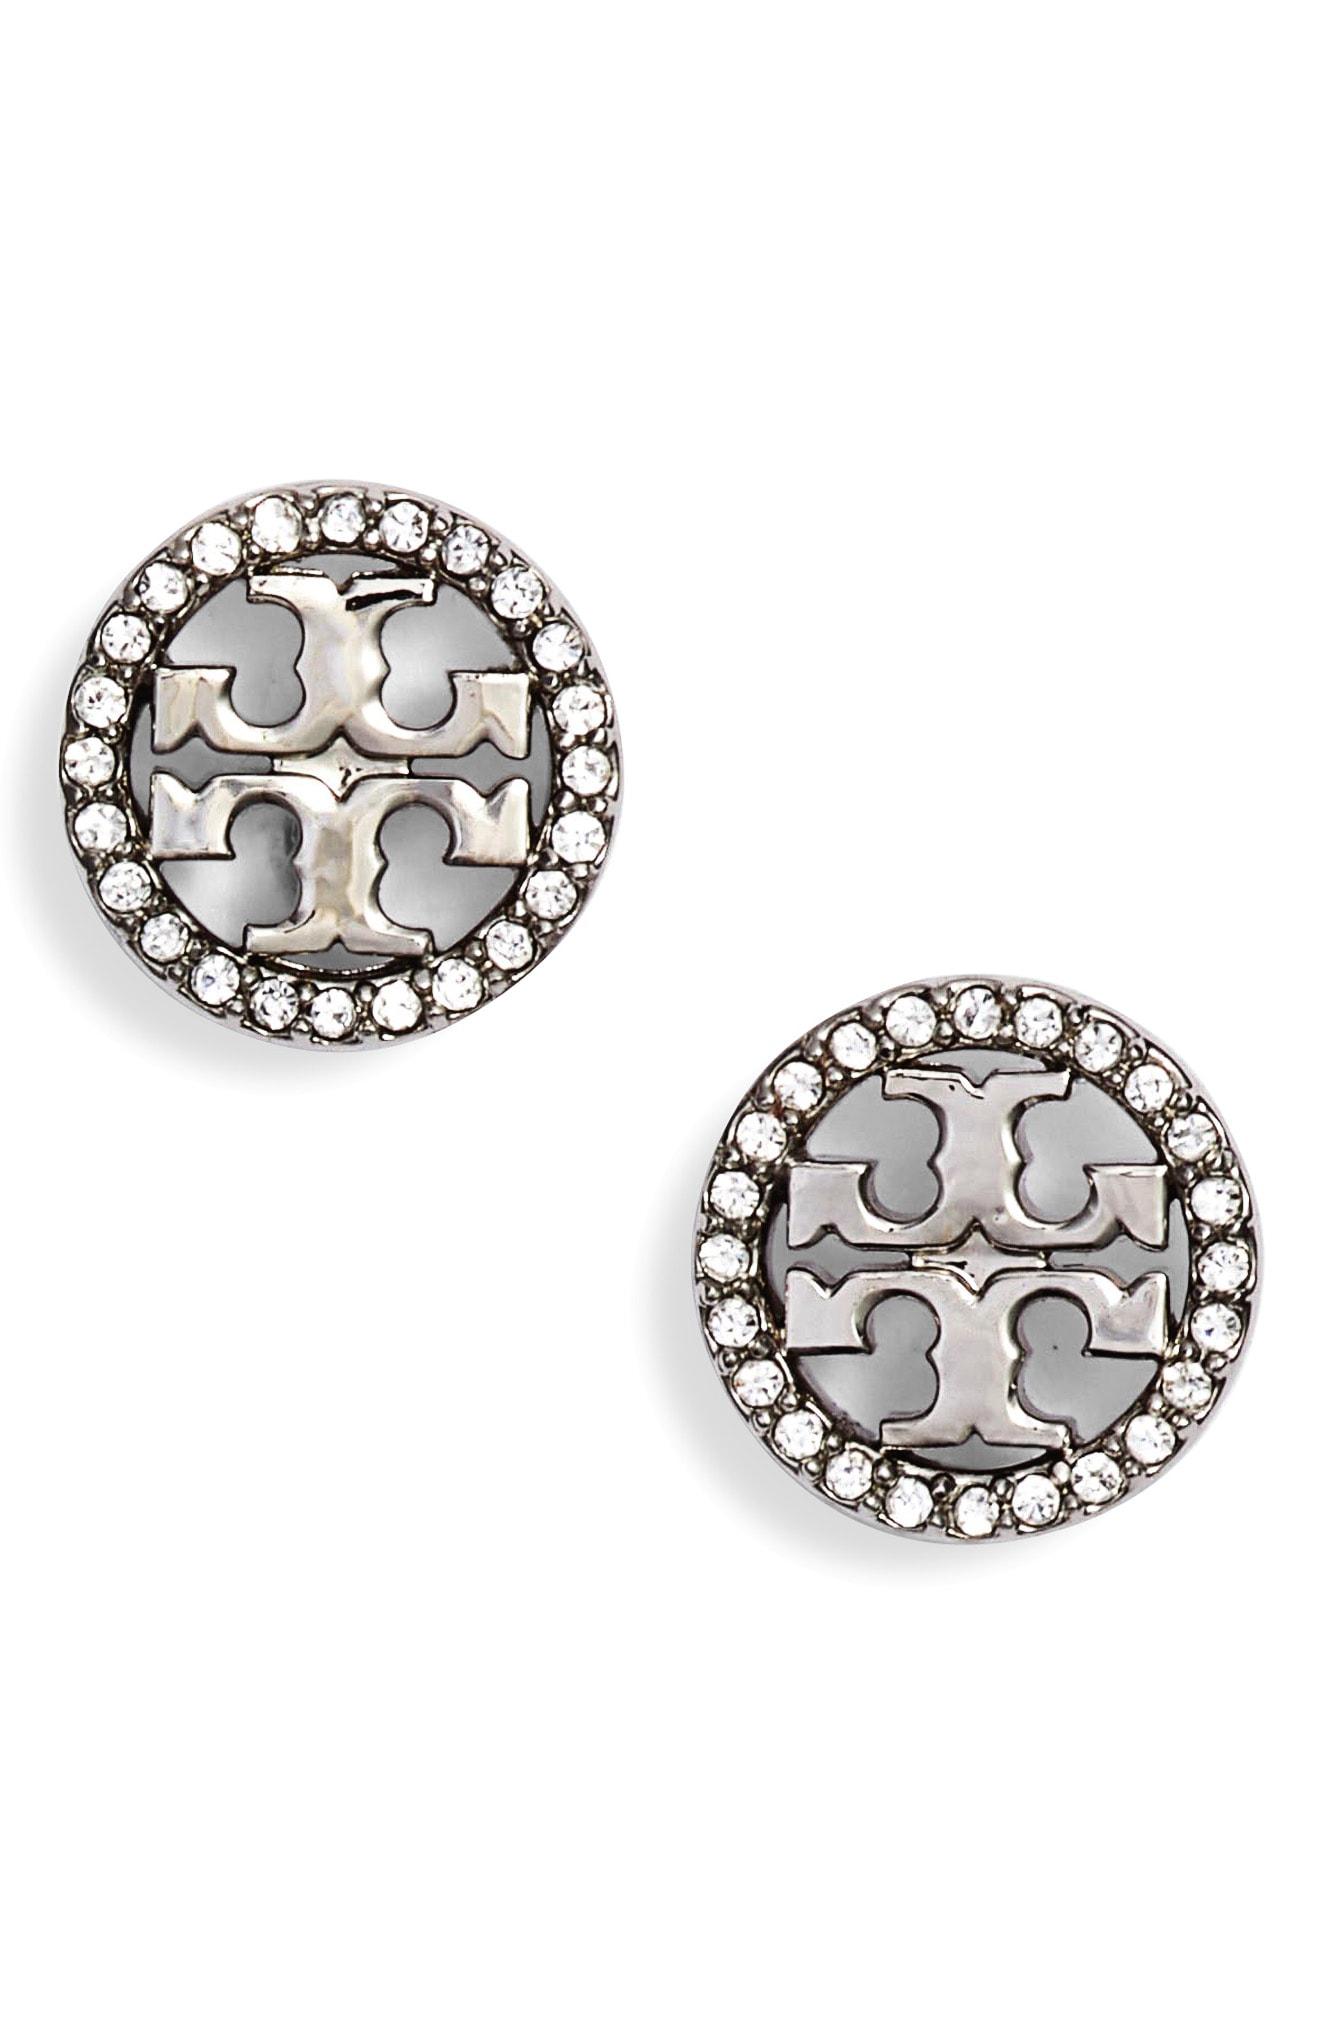 Lyst - Tory Burch Crystal Logo Circle Stud Earrings in Metallic